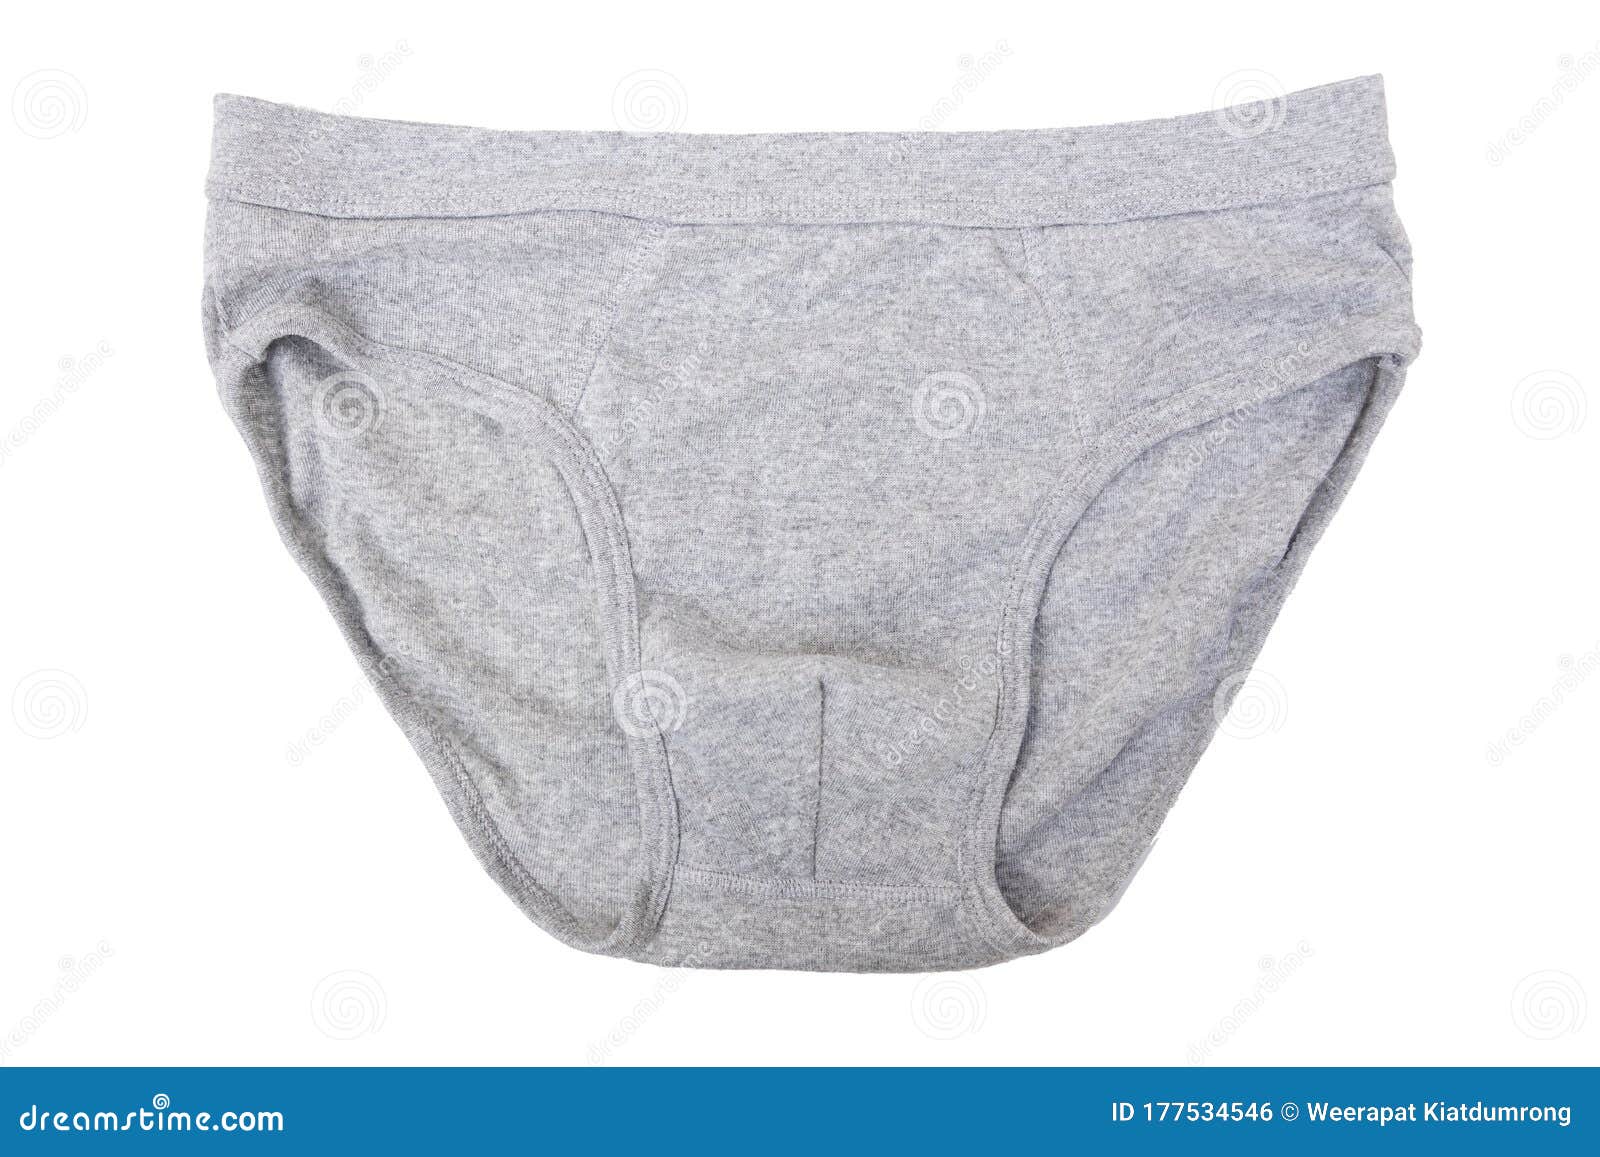 Male Underwear in Grey Color Stock Photo - Image of suit, underwear ...